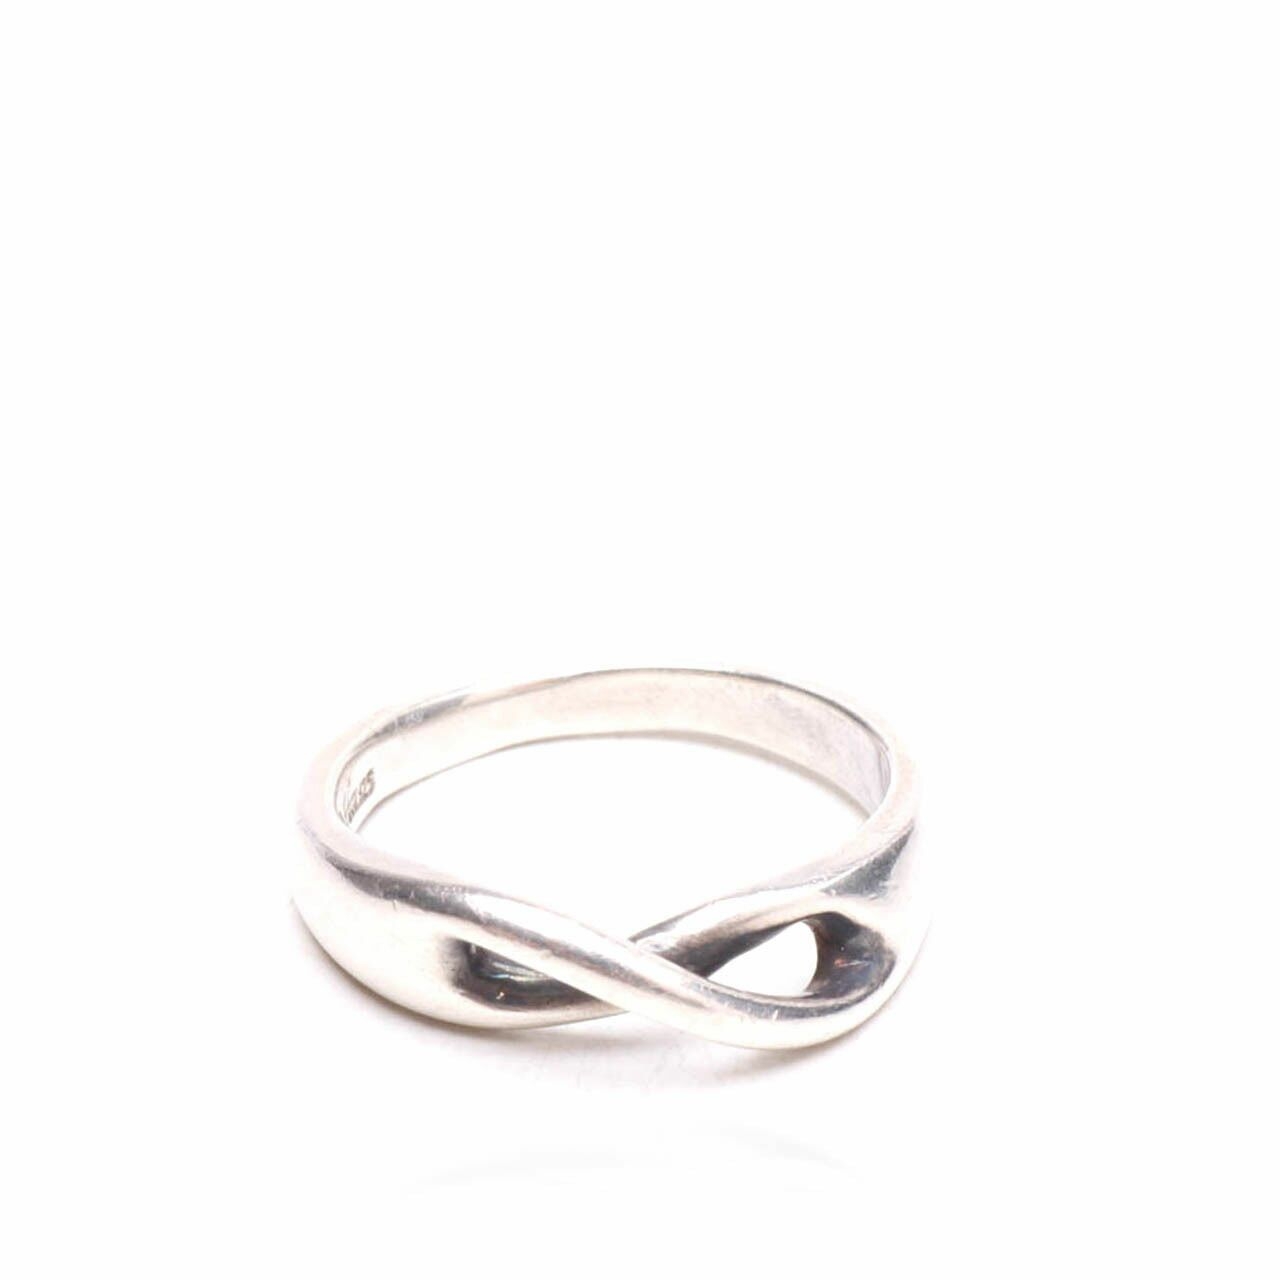 Tiffany & Co. Silver Ring